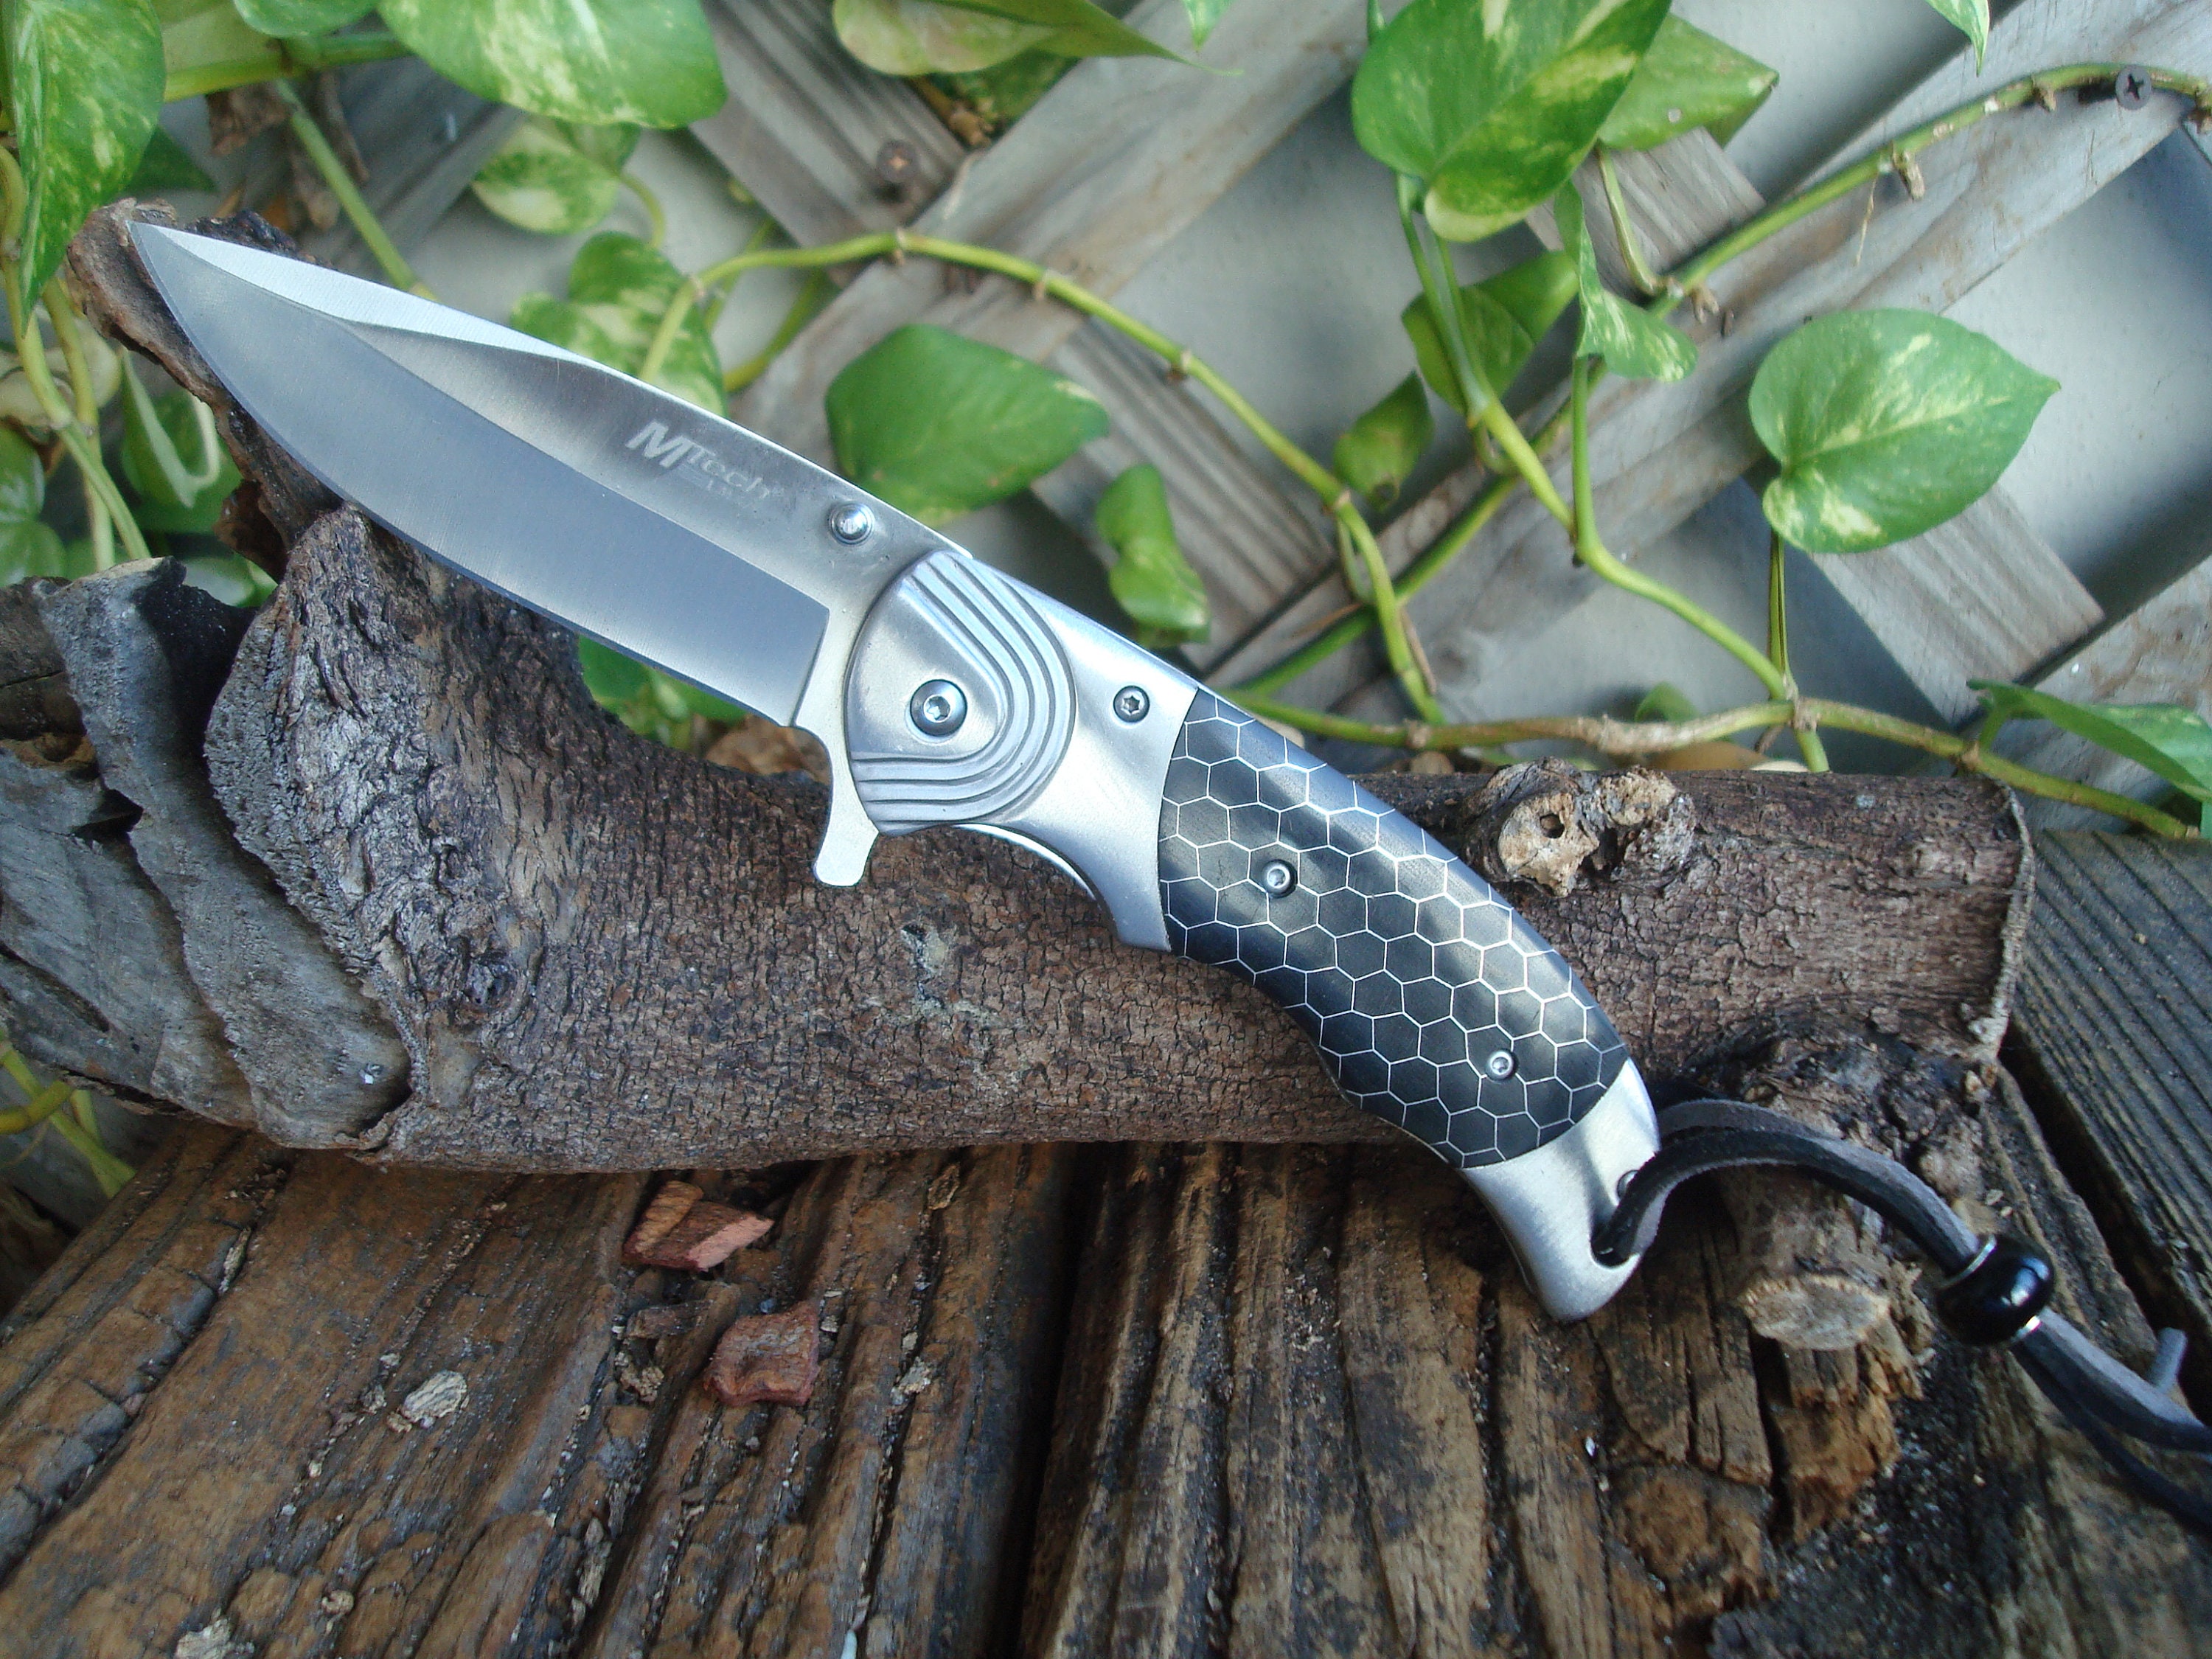 Winter Eagle Pocket Knife 3Cr13 Stainless Steel